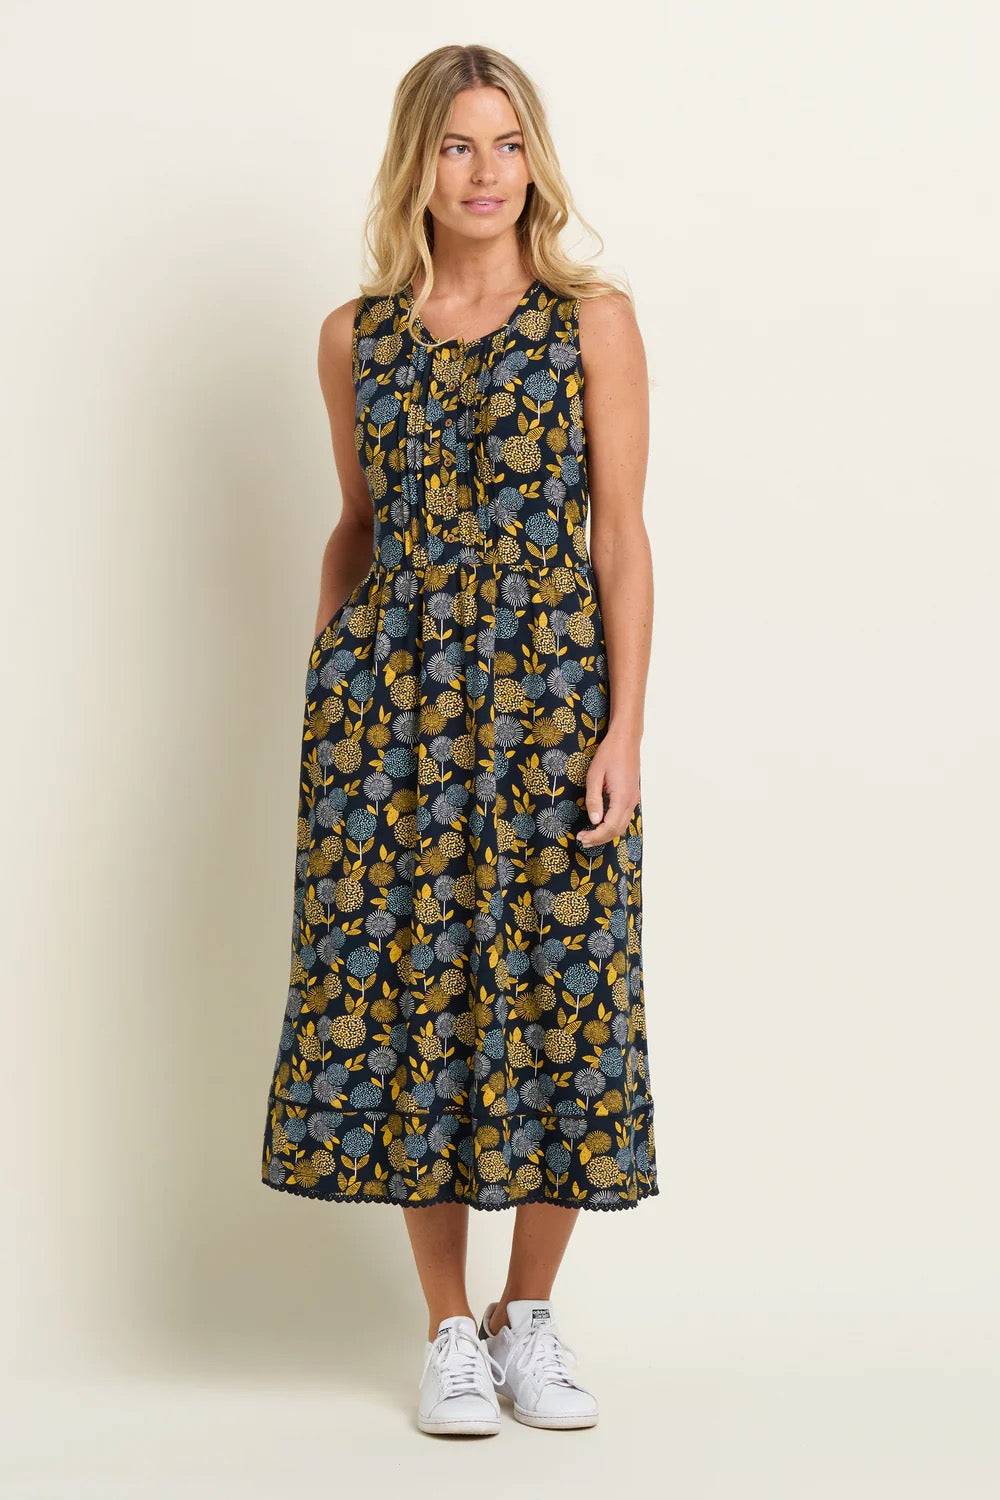 Brakeburn Women's Luna Floral Midi Dress - Navy/Mustard